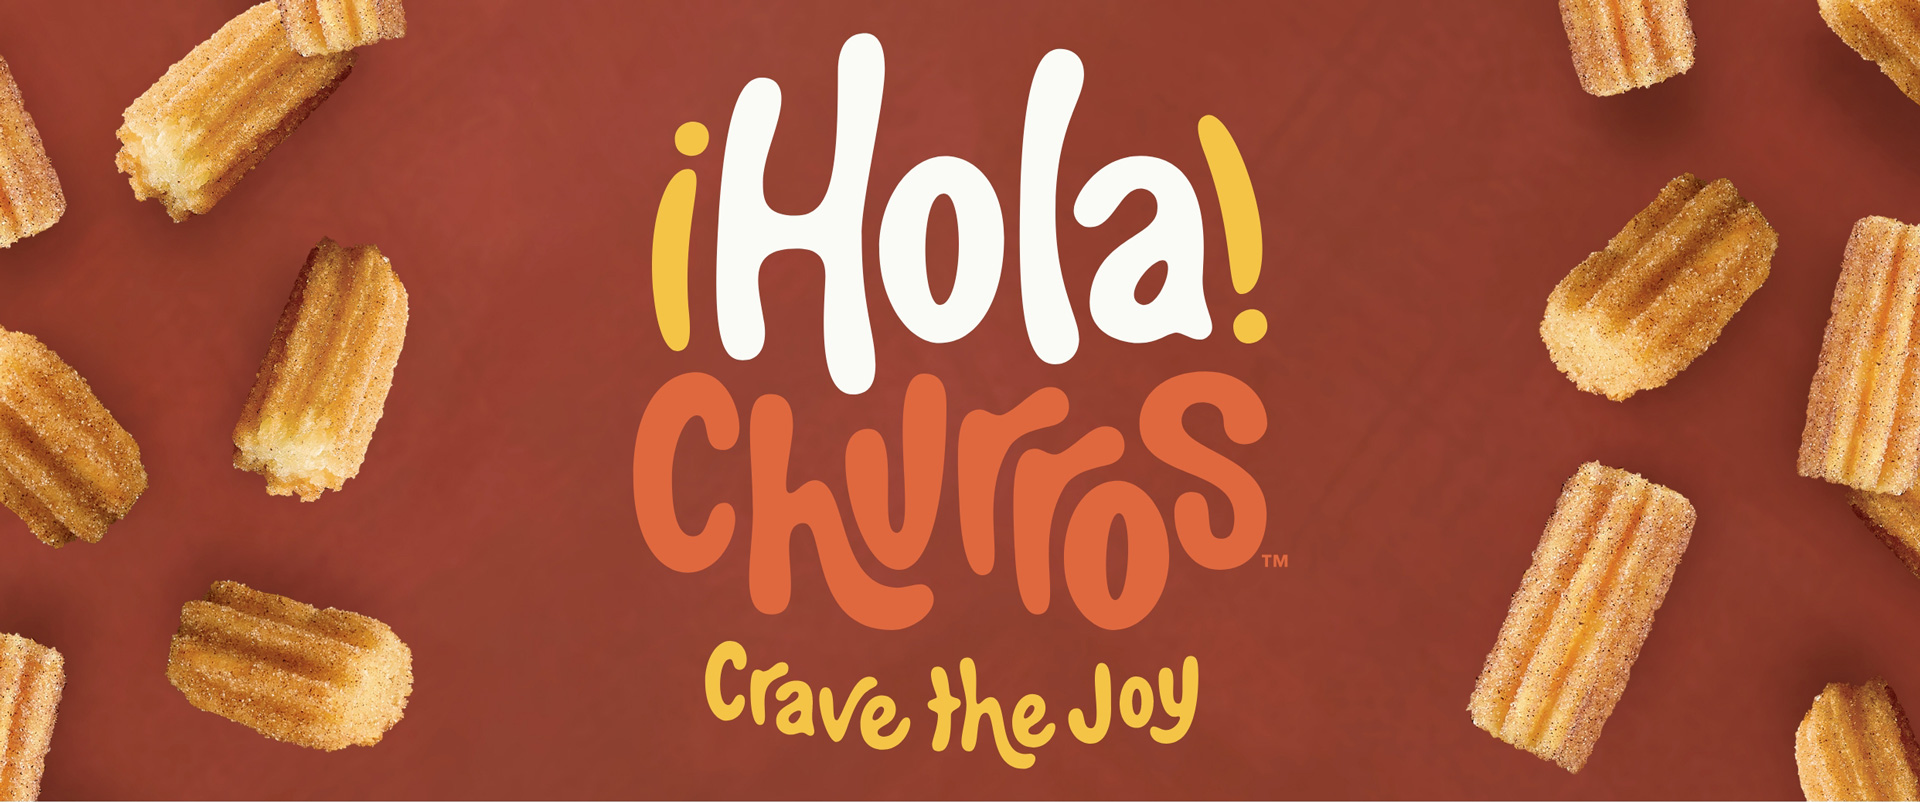 Hola Churros - Crave the Joy